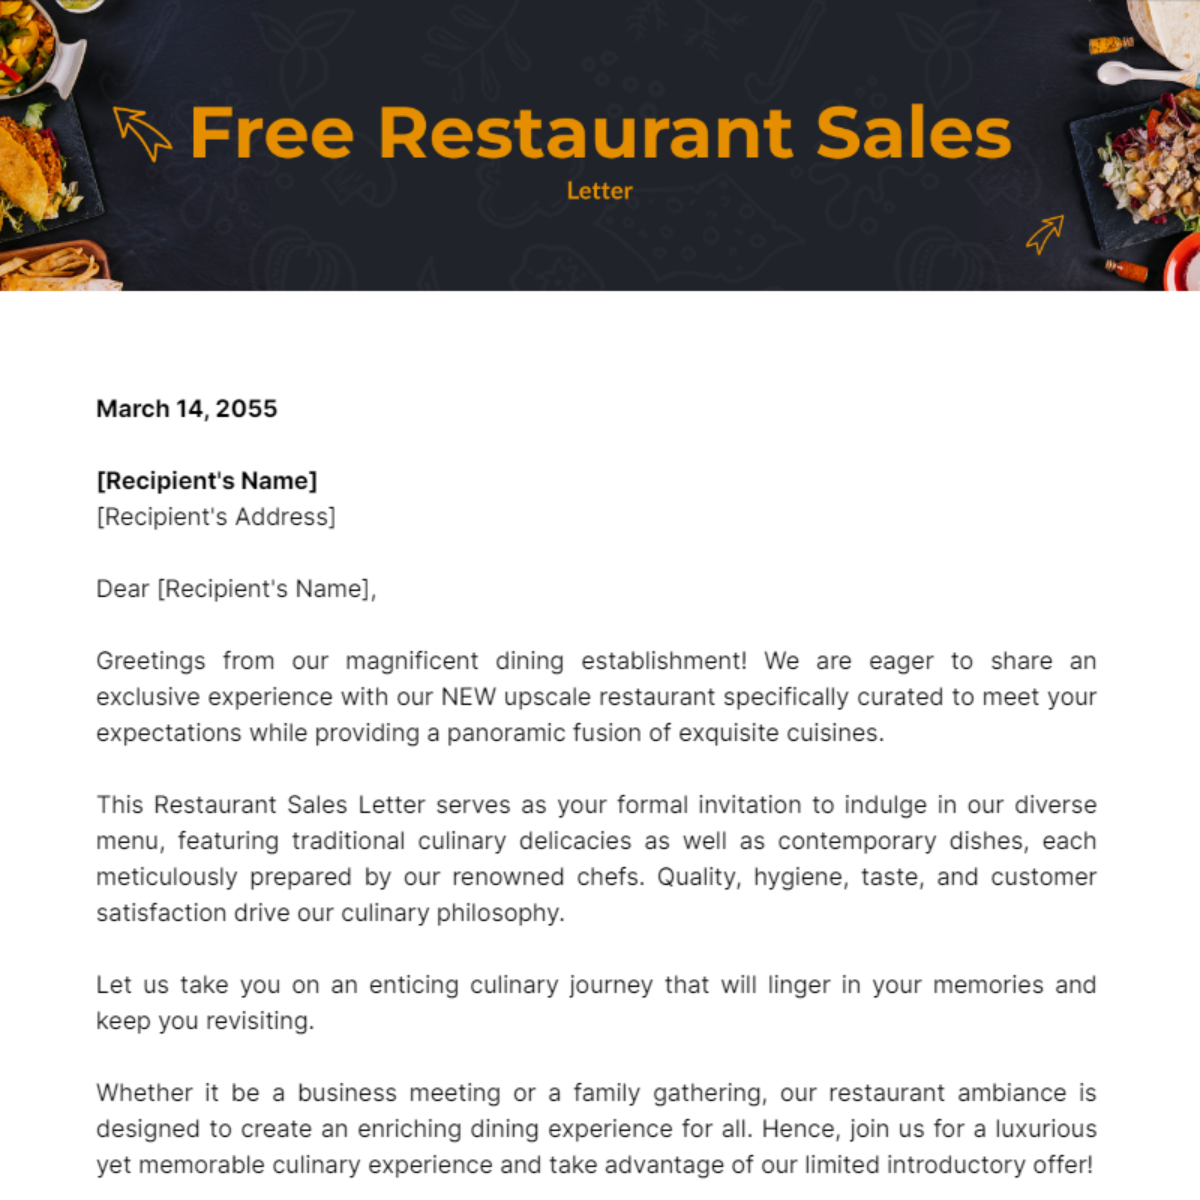 Restaurant Sales Letter Template